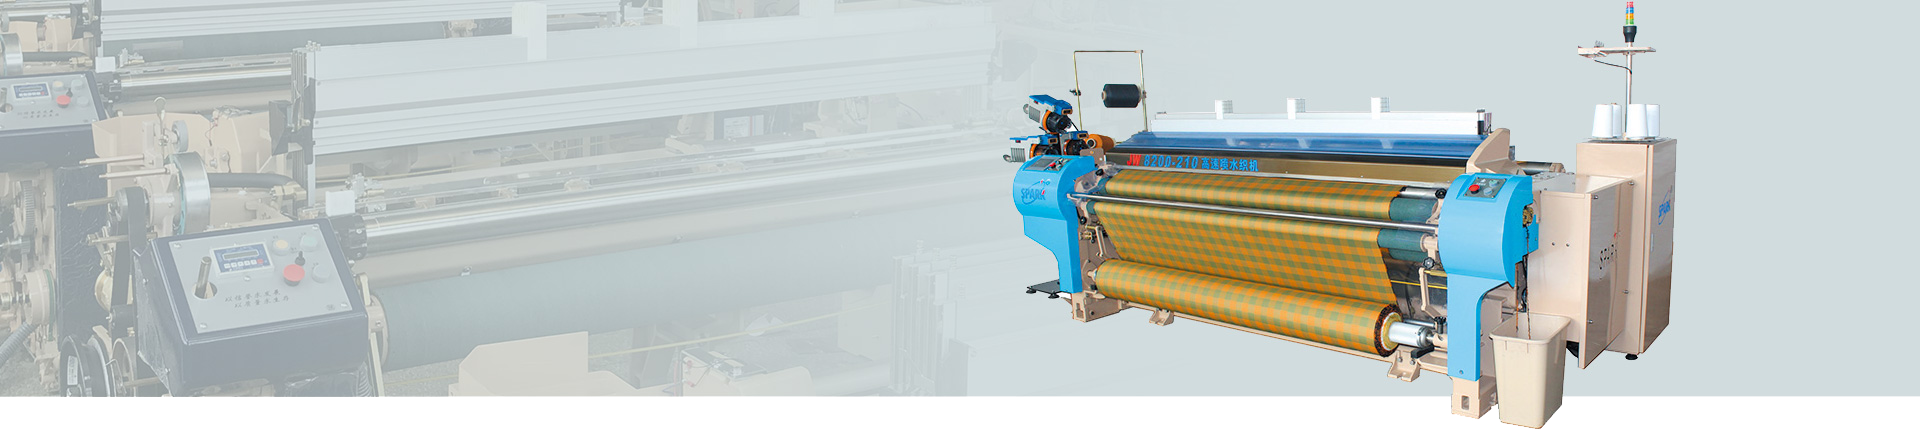 Spark Yinchun Textile Machinery Co.,Ltd. 